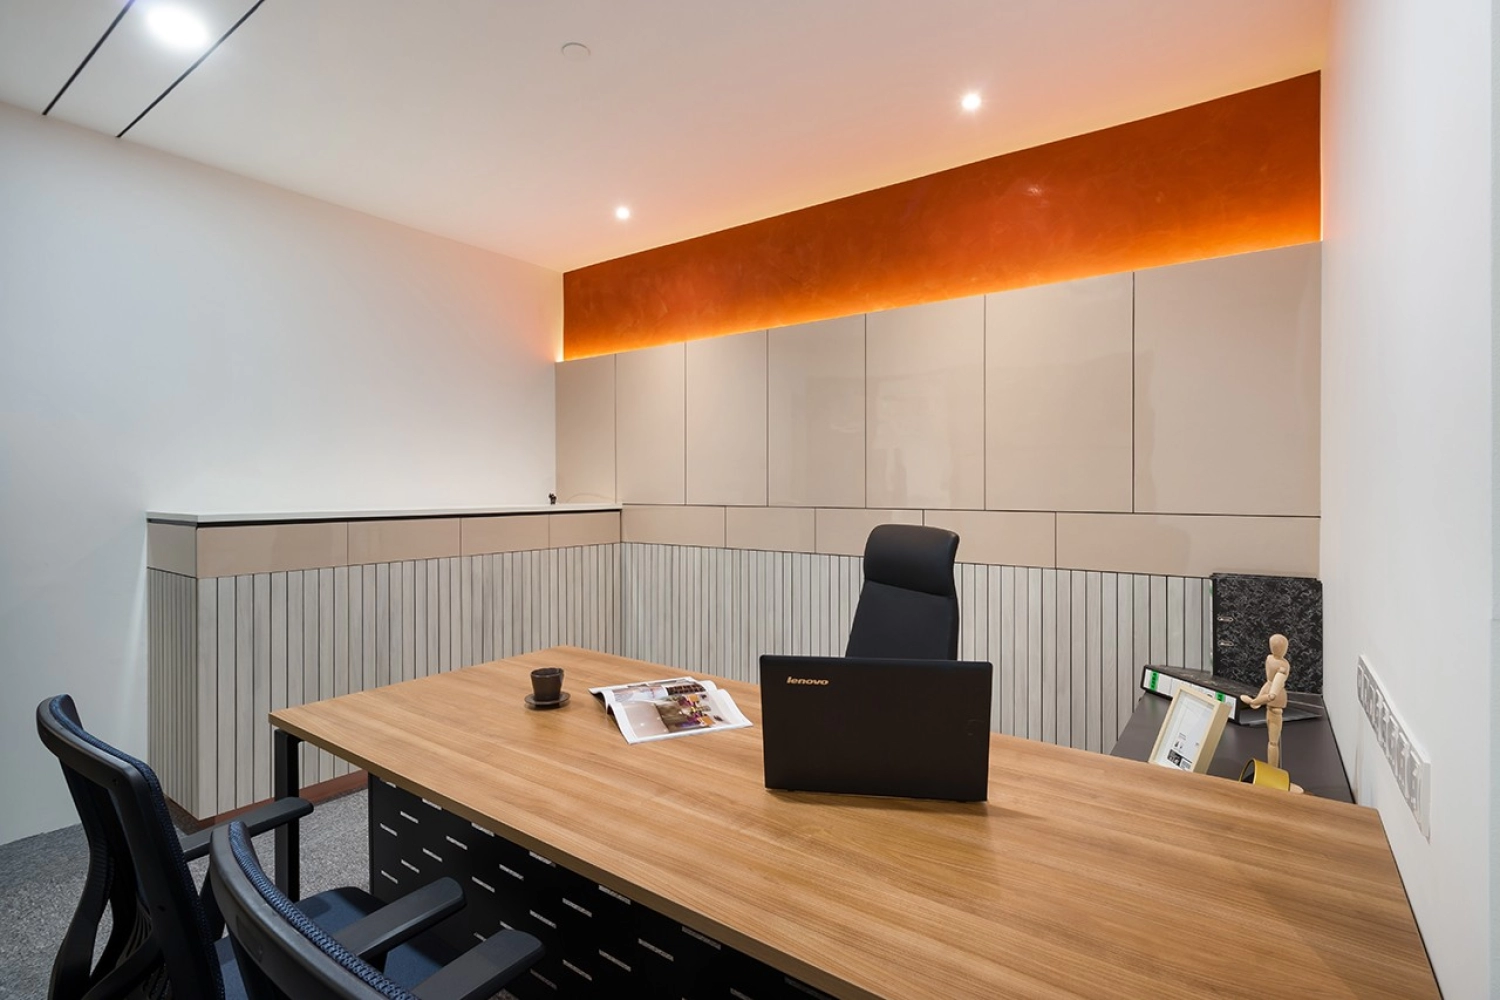 Best Office Design | Elegance In Simplicity